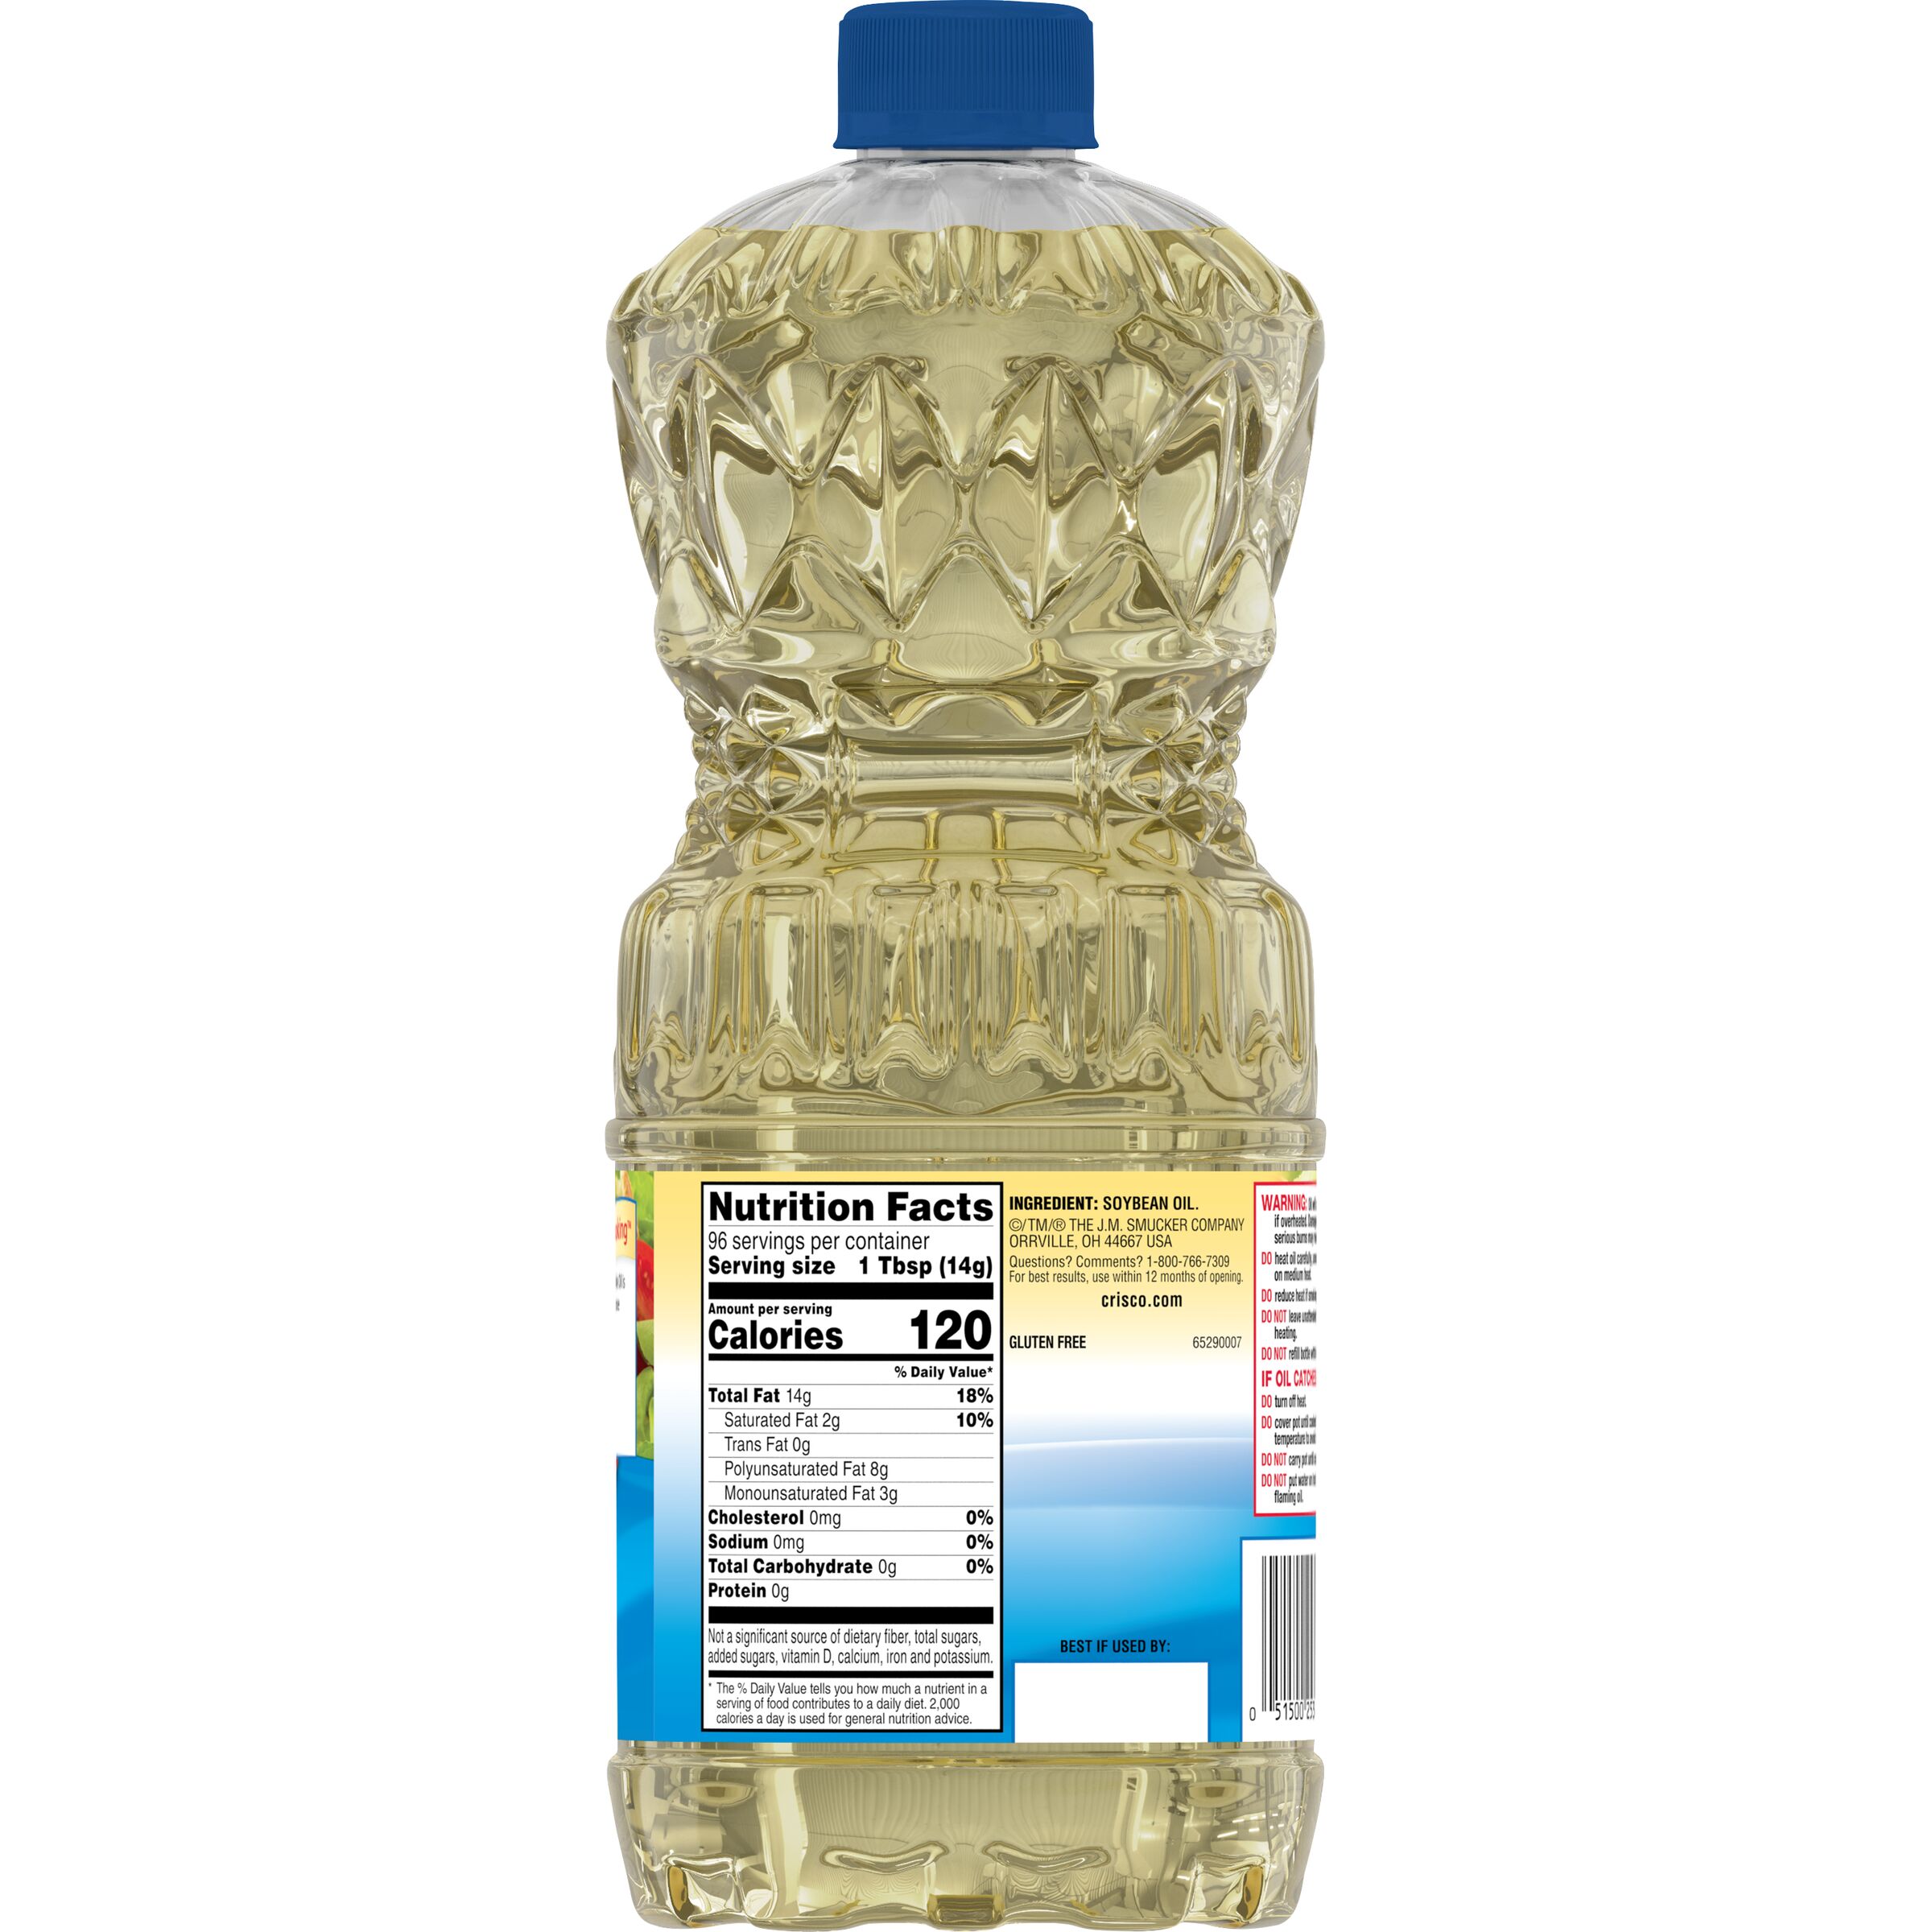 Crisco Pure Vegetable Oil 48 fl. oz. Bottle - image 2 of 8